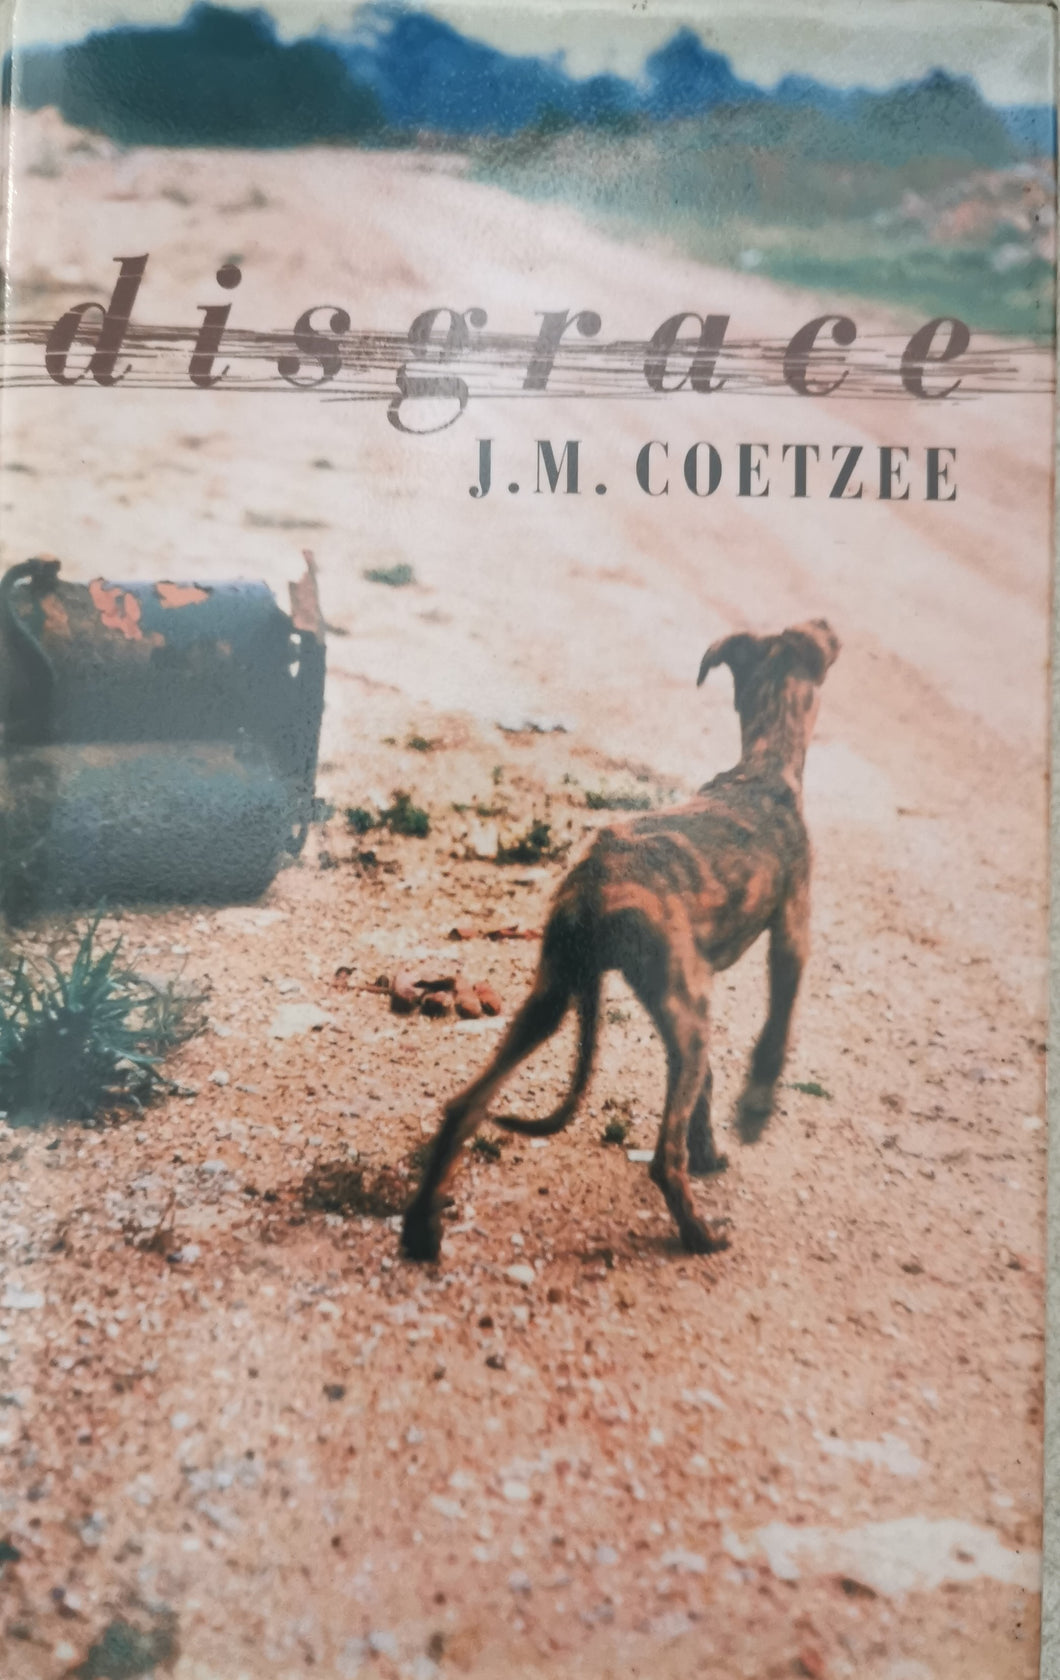 JM Coetzee - Disgrace